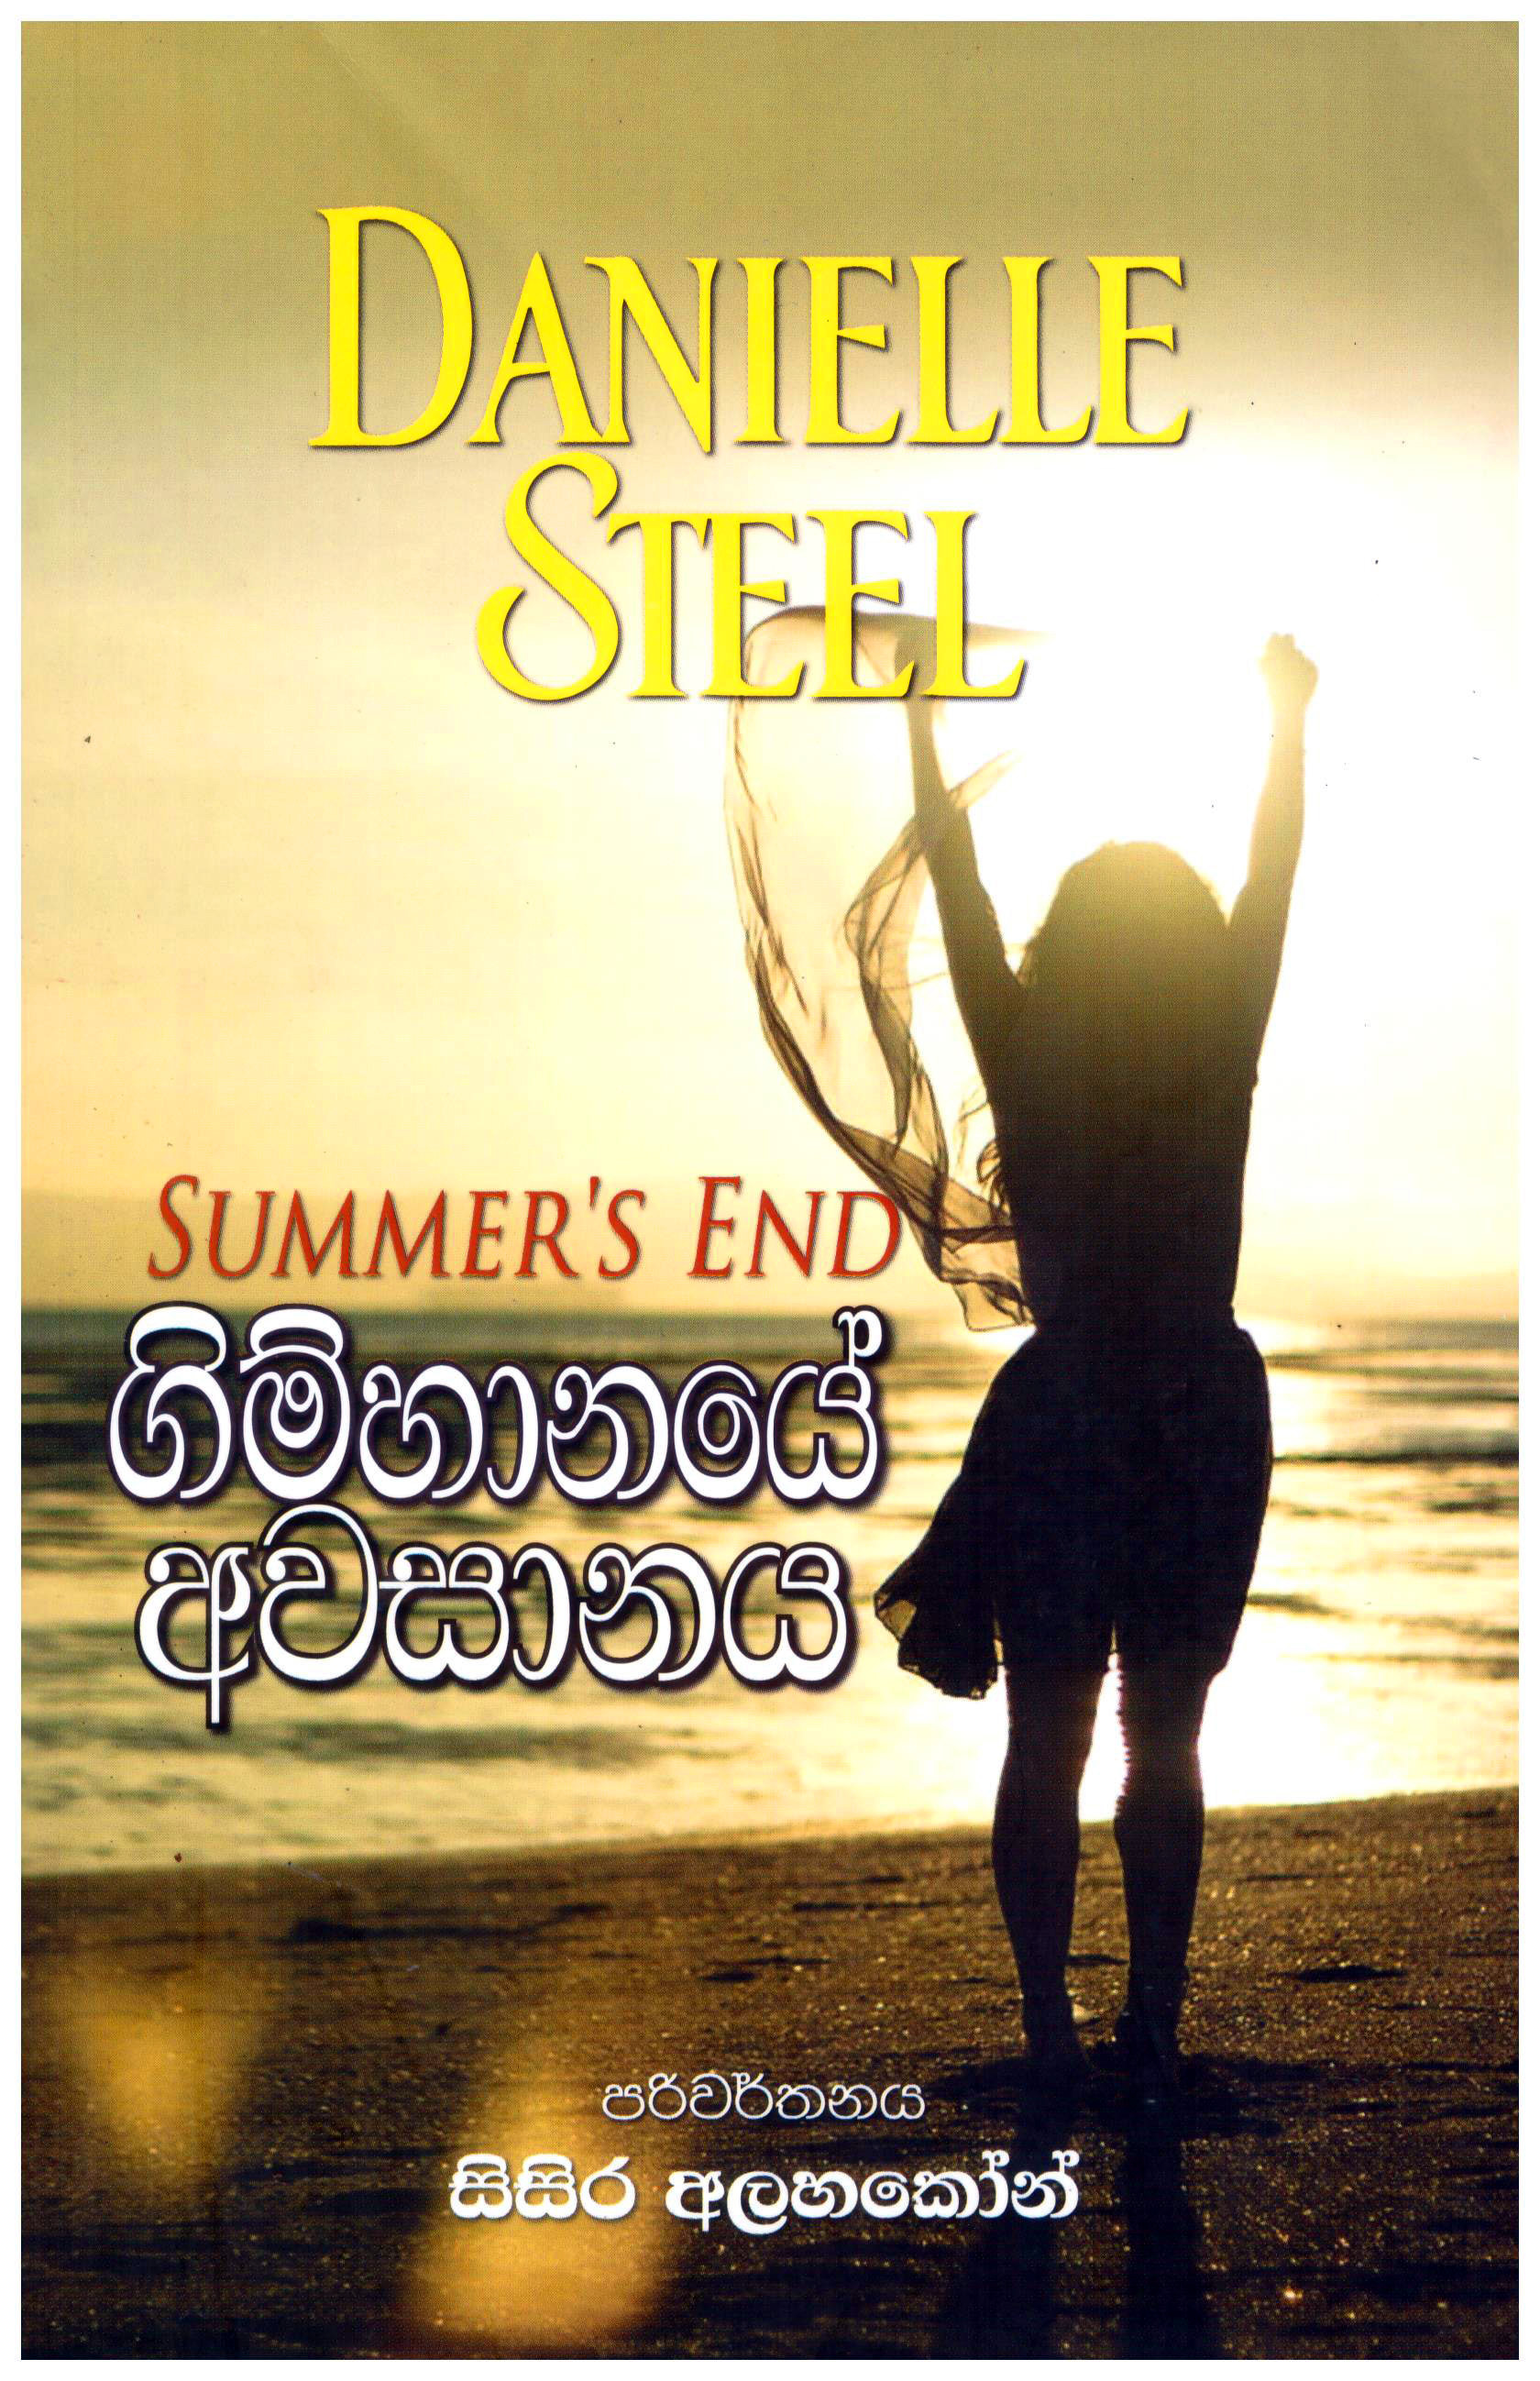 Gimhanaye Awasanaya - Translation of Summer's End By Denielle Steel